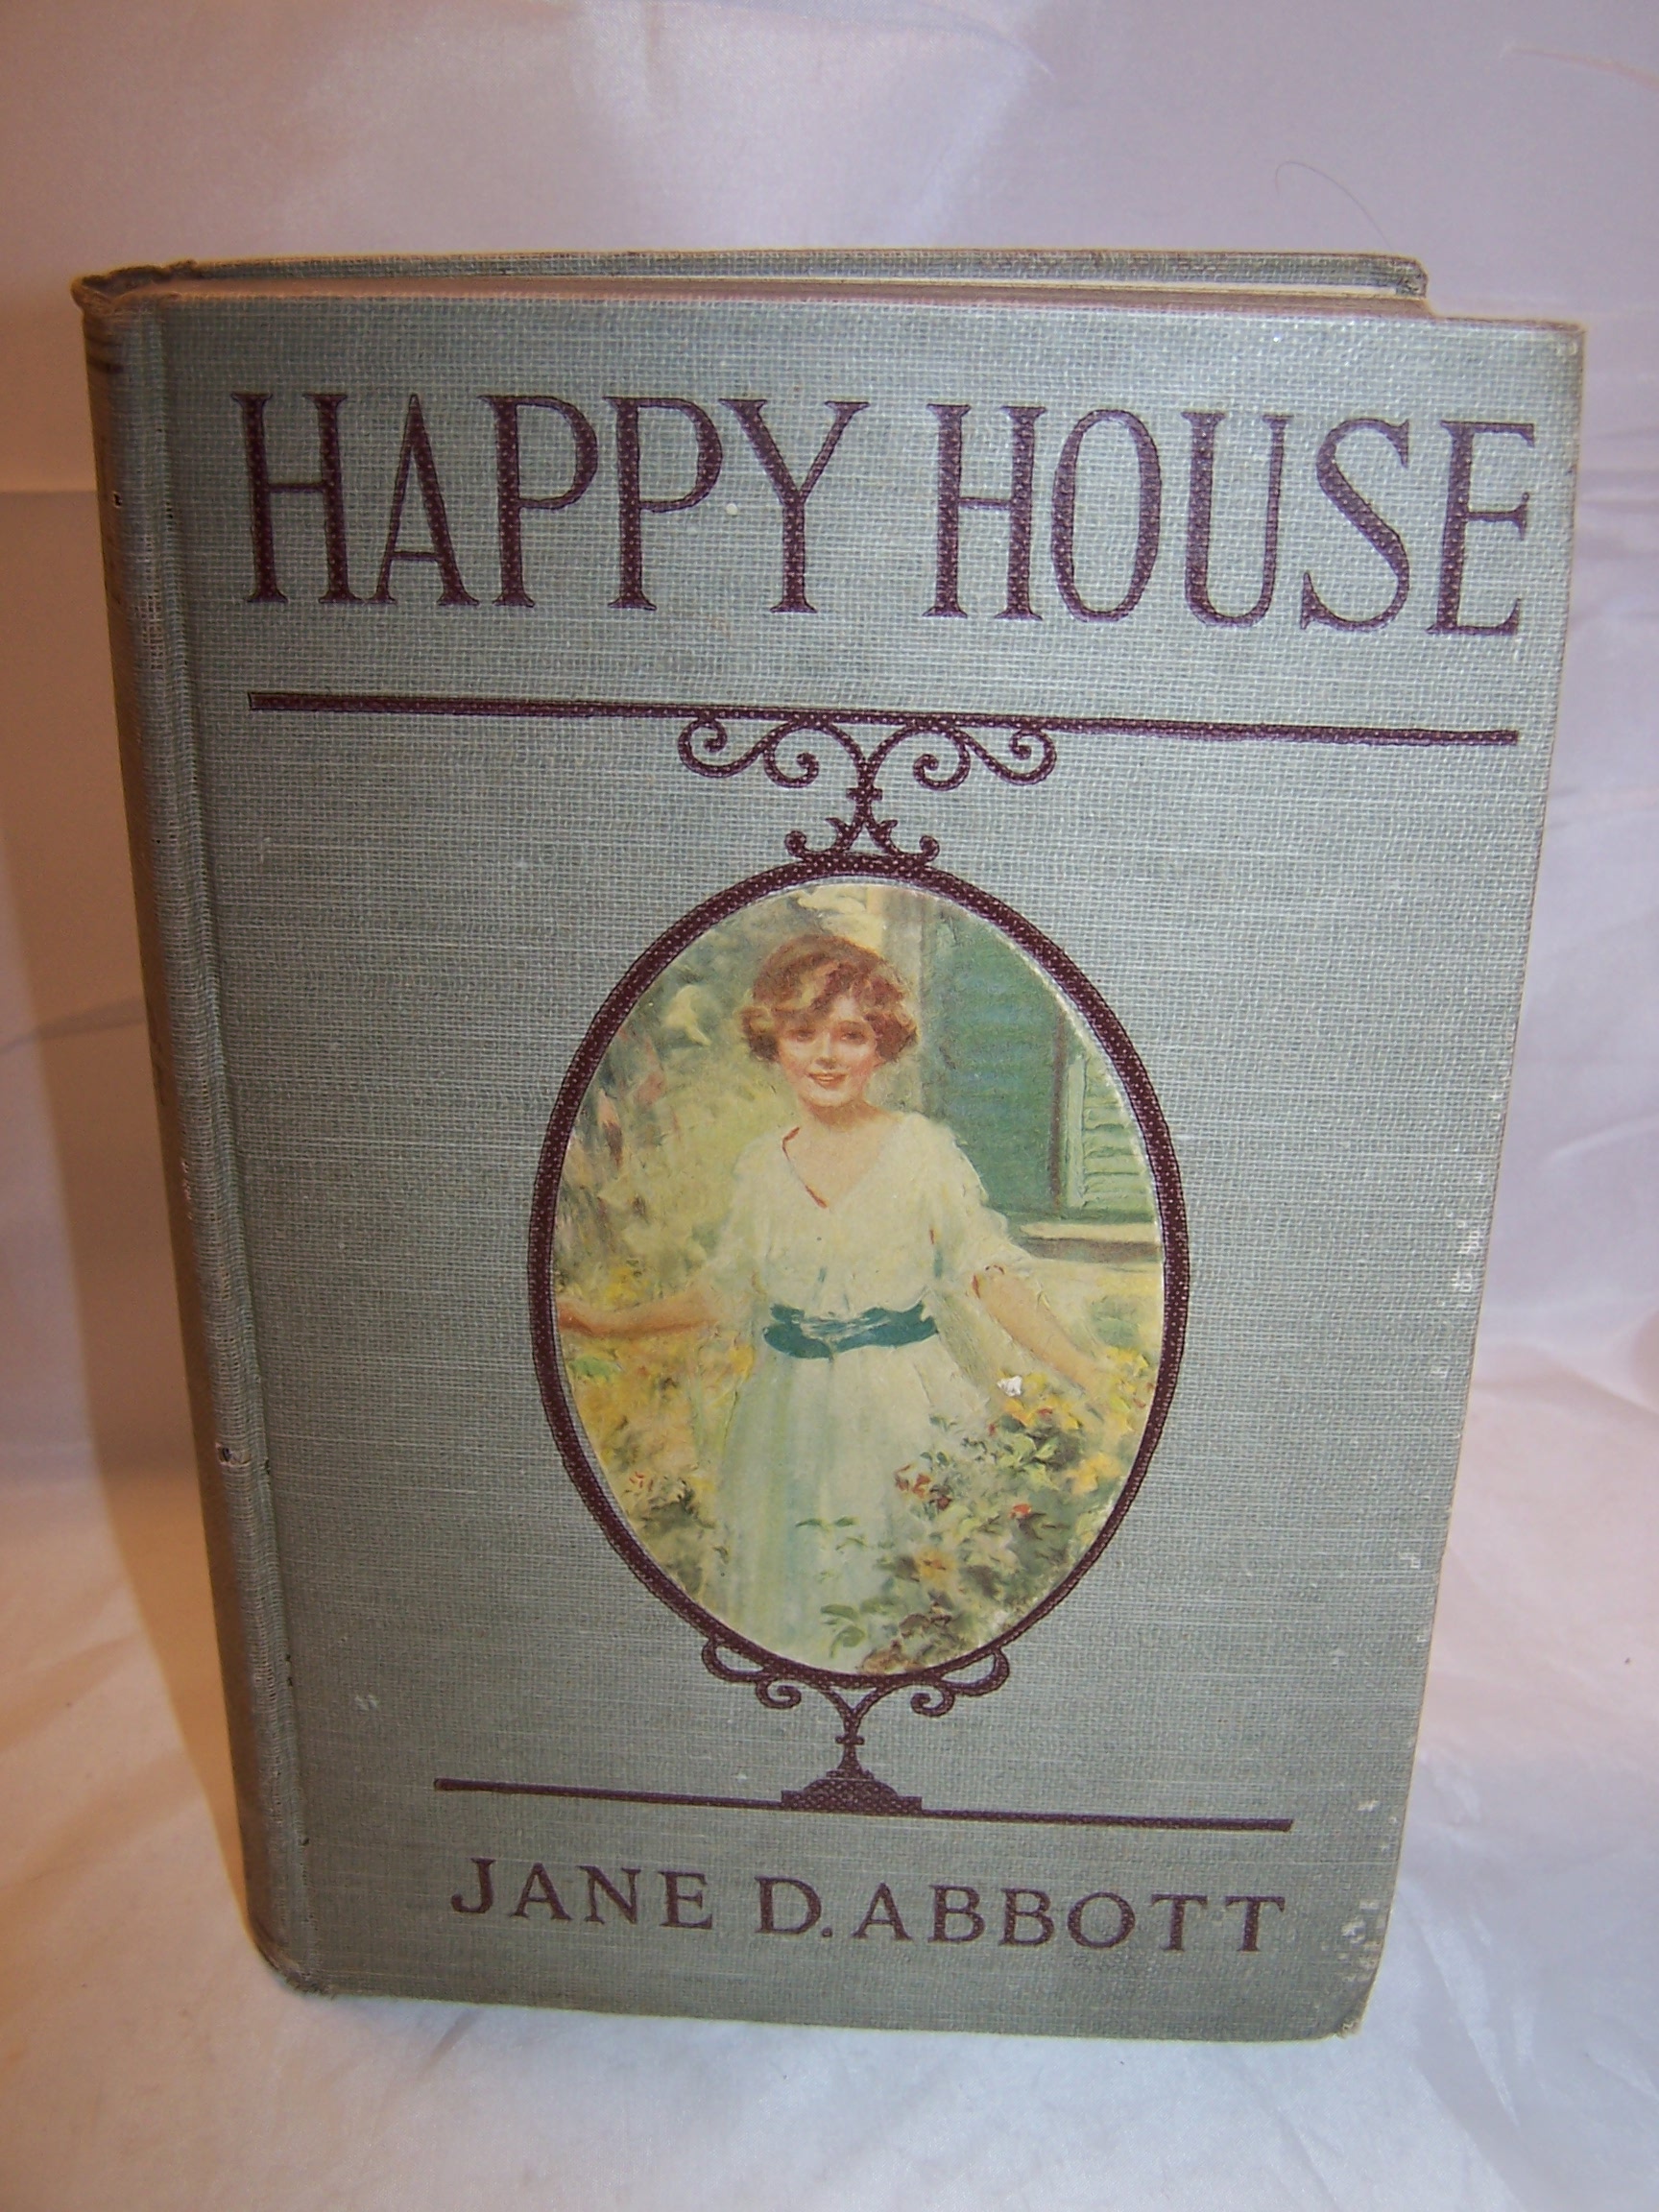 Happy House, Jane D. Abbott